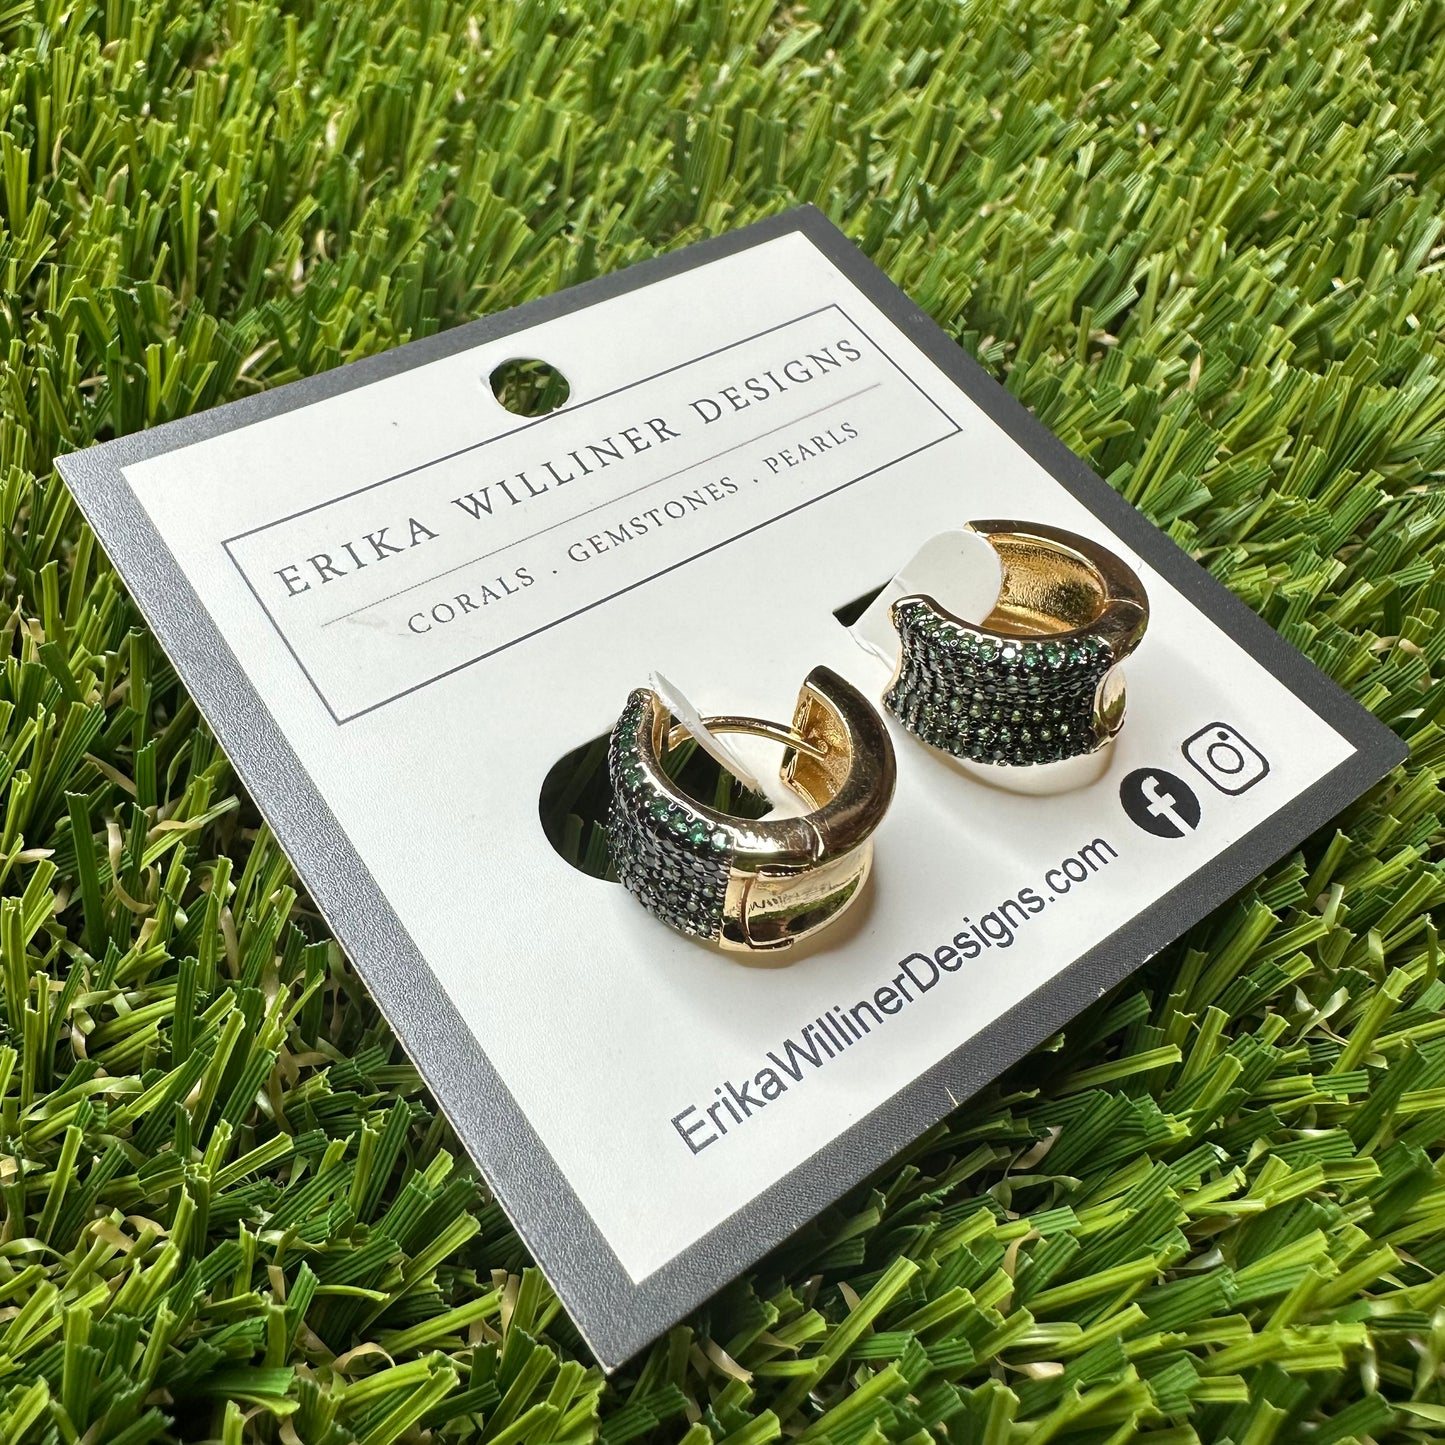 Erika Williner Designs - Lori earrings